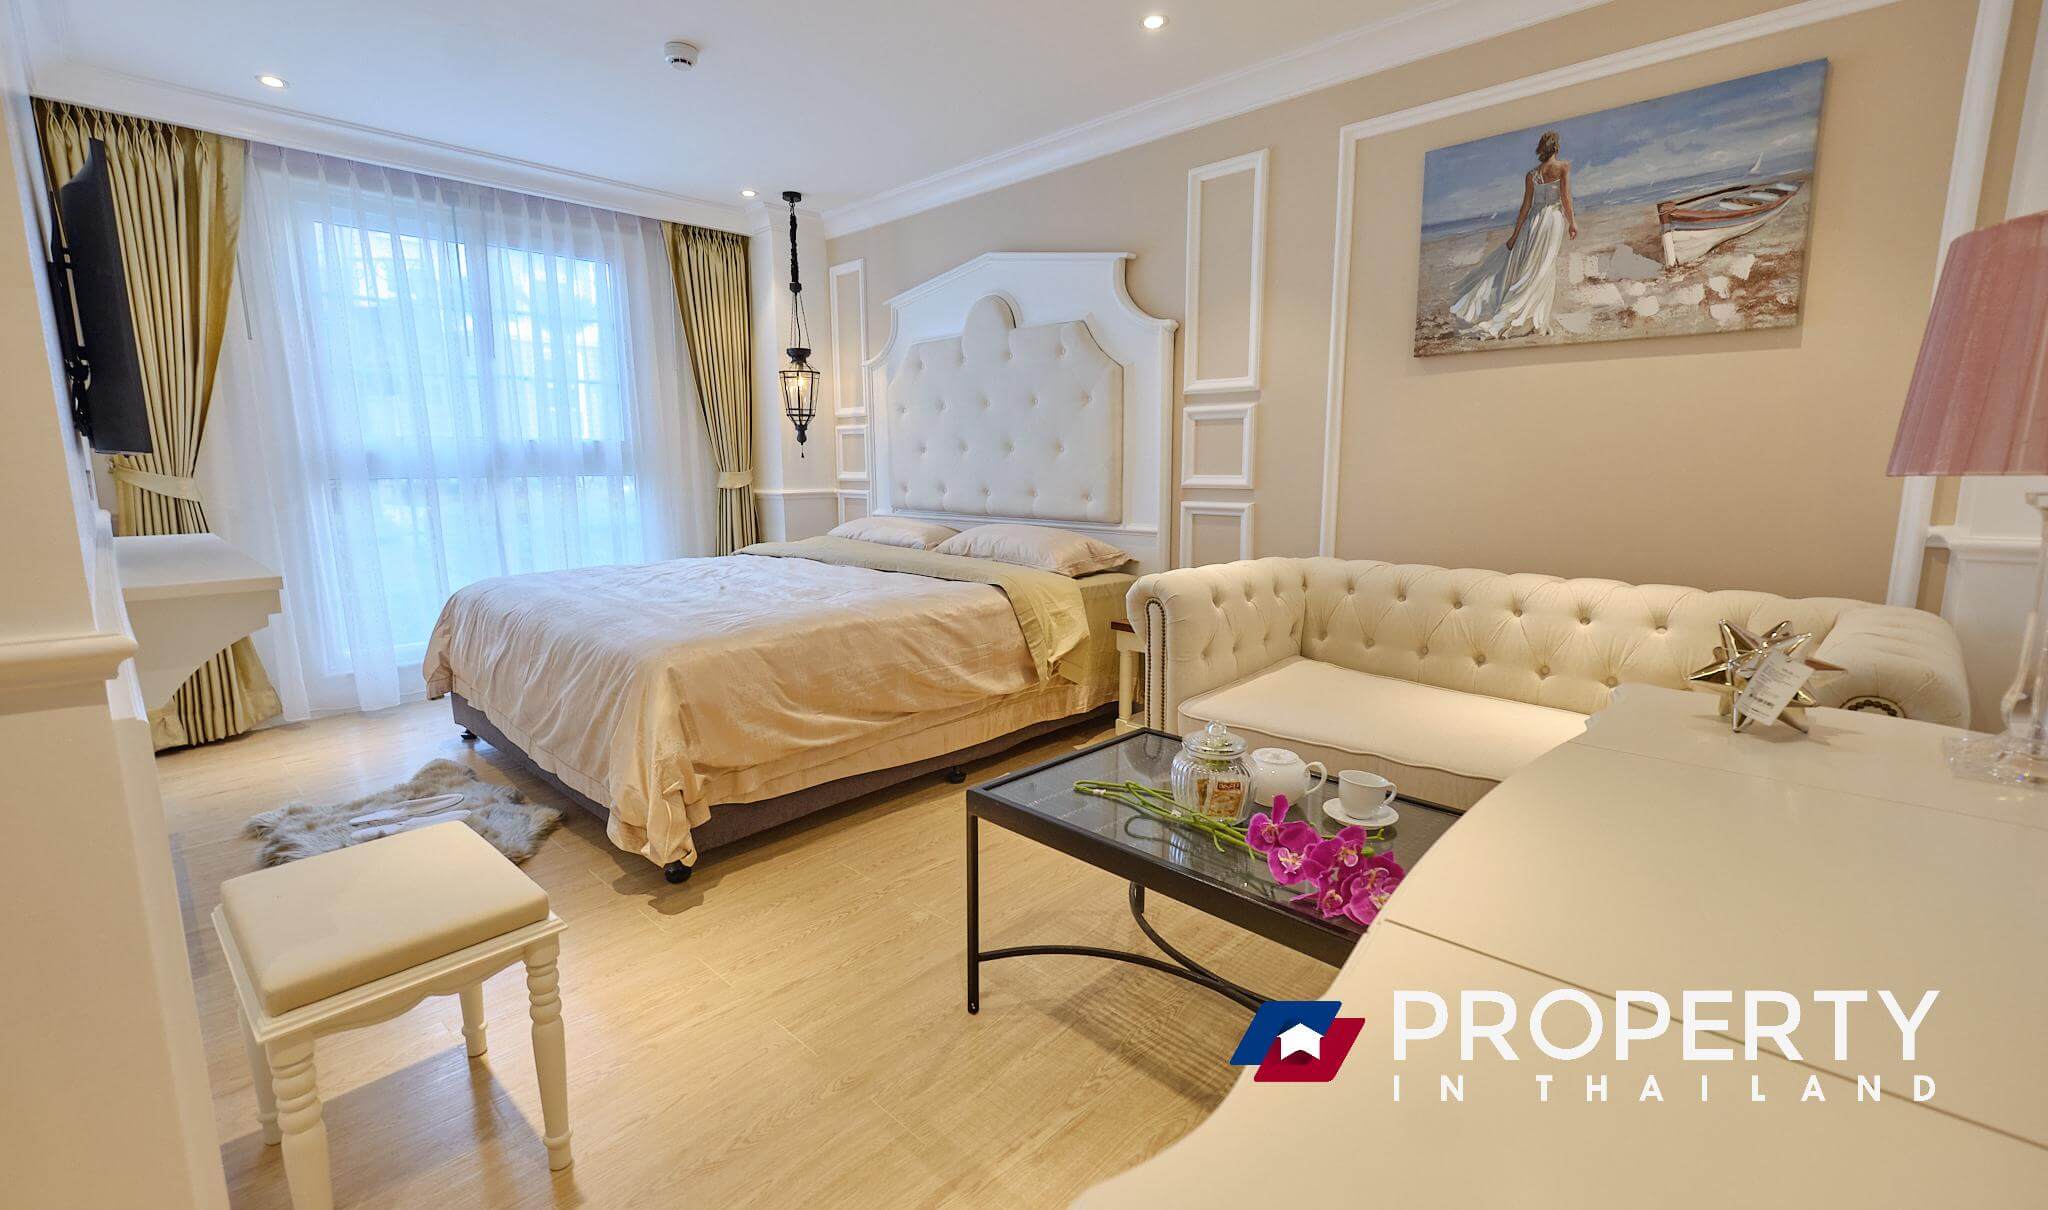 Pattaya Real Estate - 3 Bed (103) - Bedroom